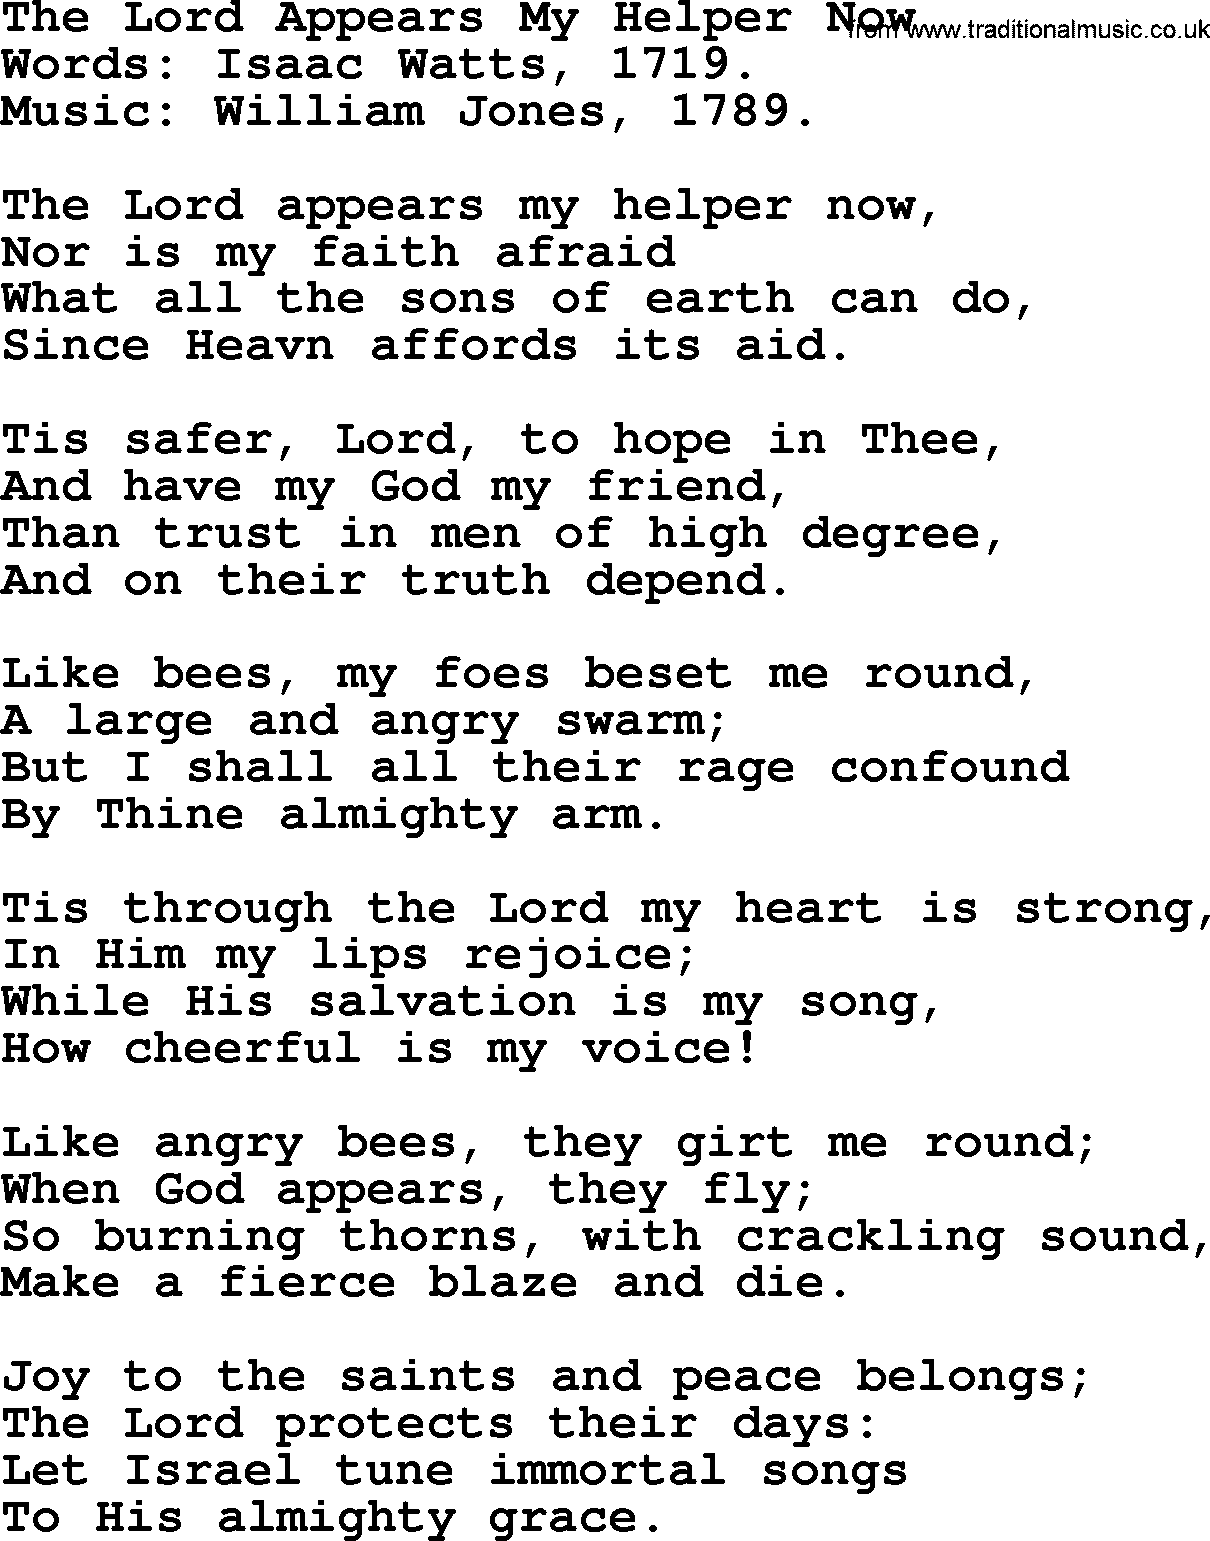 Isaac Watts Christian hymn: The Lord Appears My Helper Now- lyricss